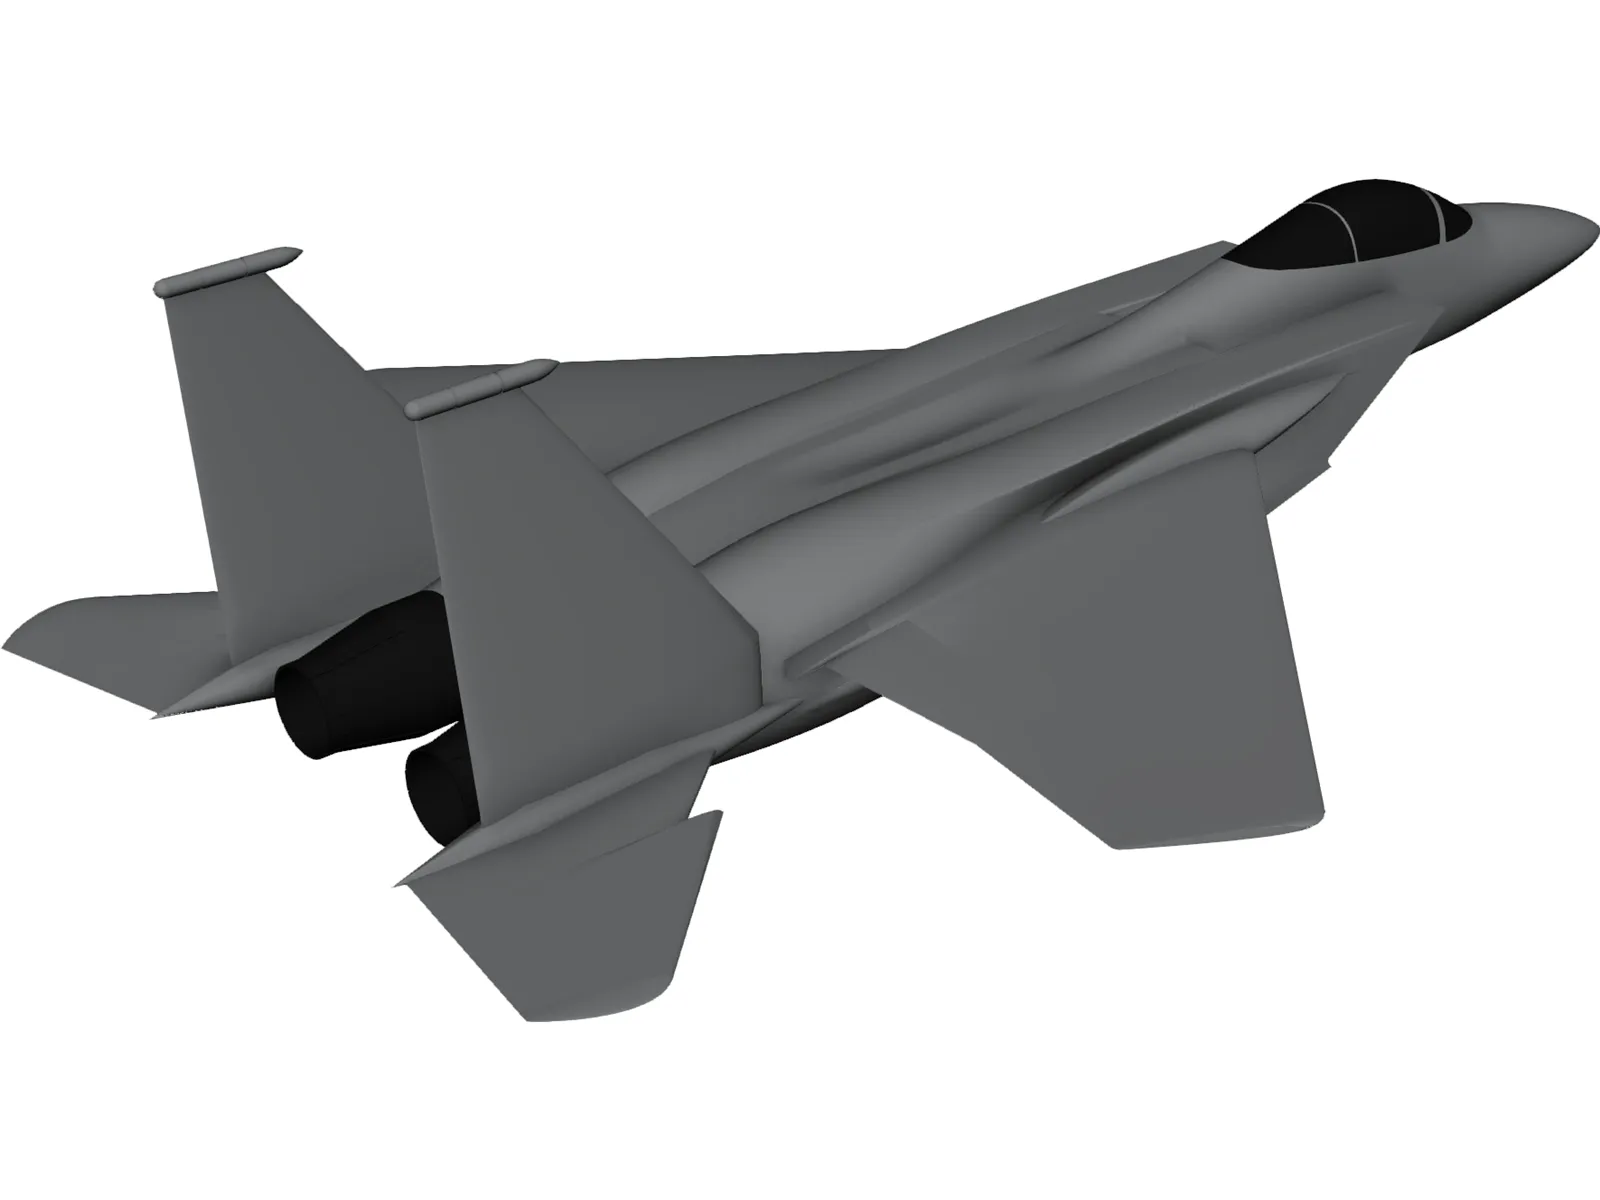 F-15C Eagle 3D Model